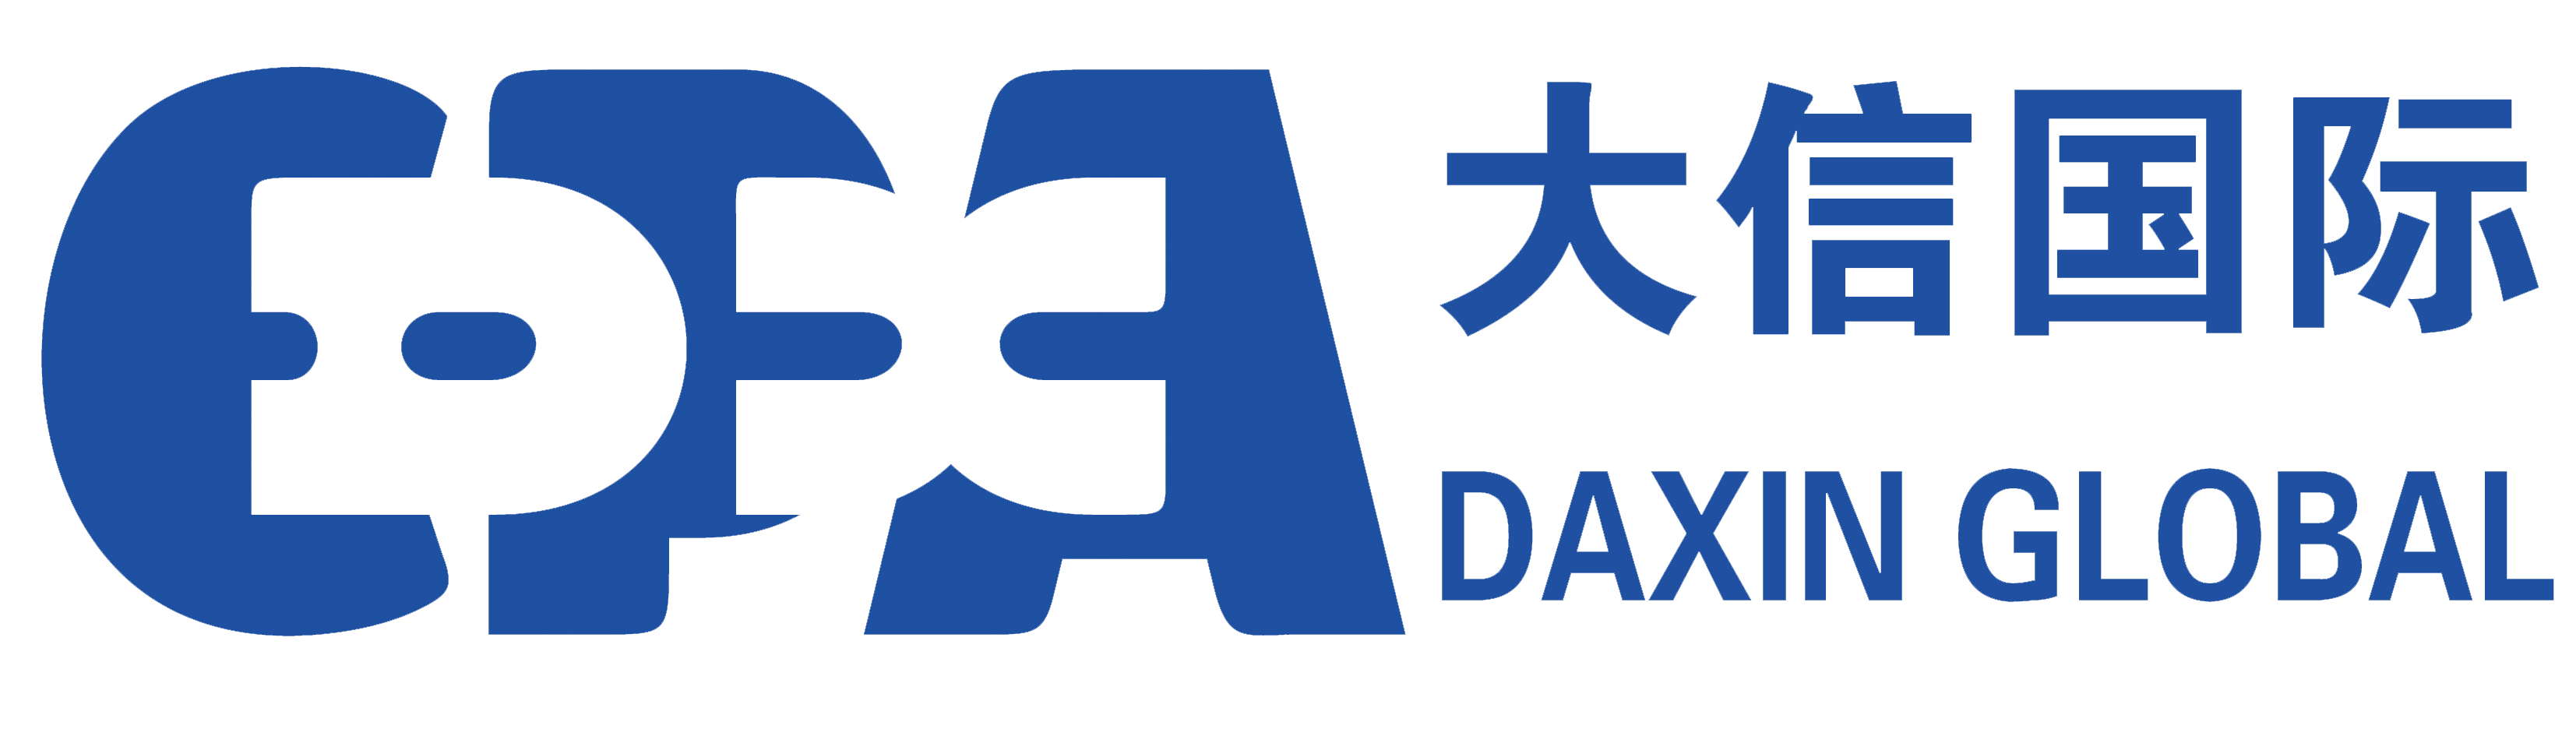 Daxin Global logo